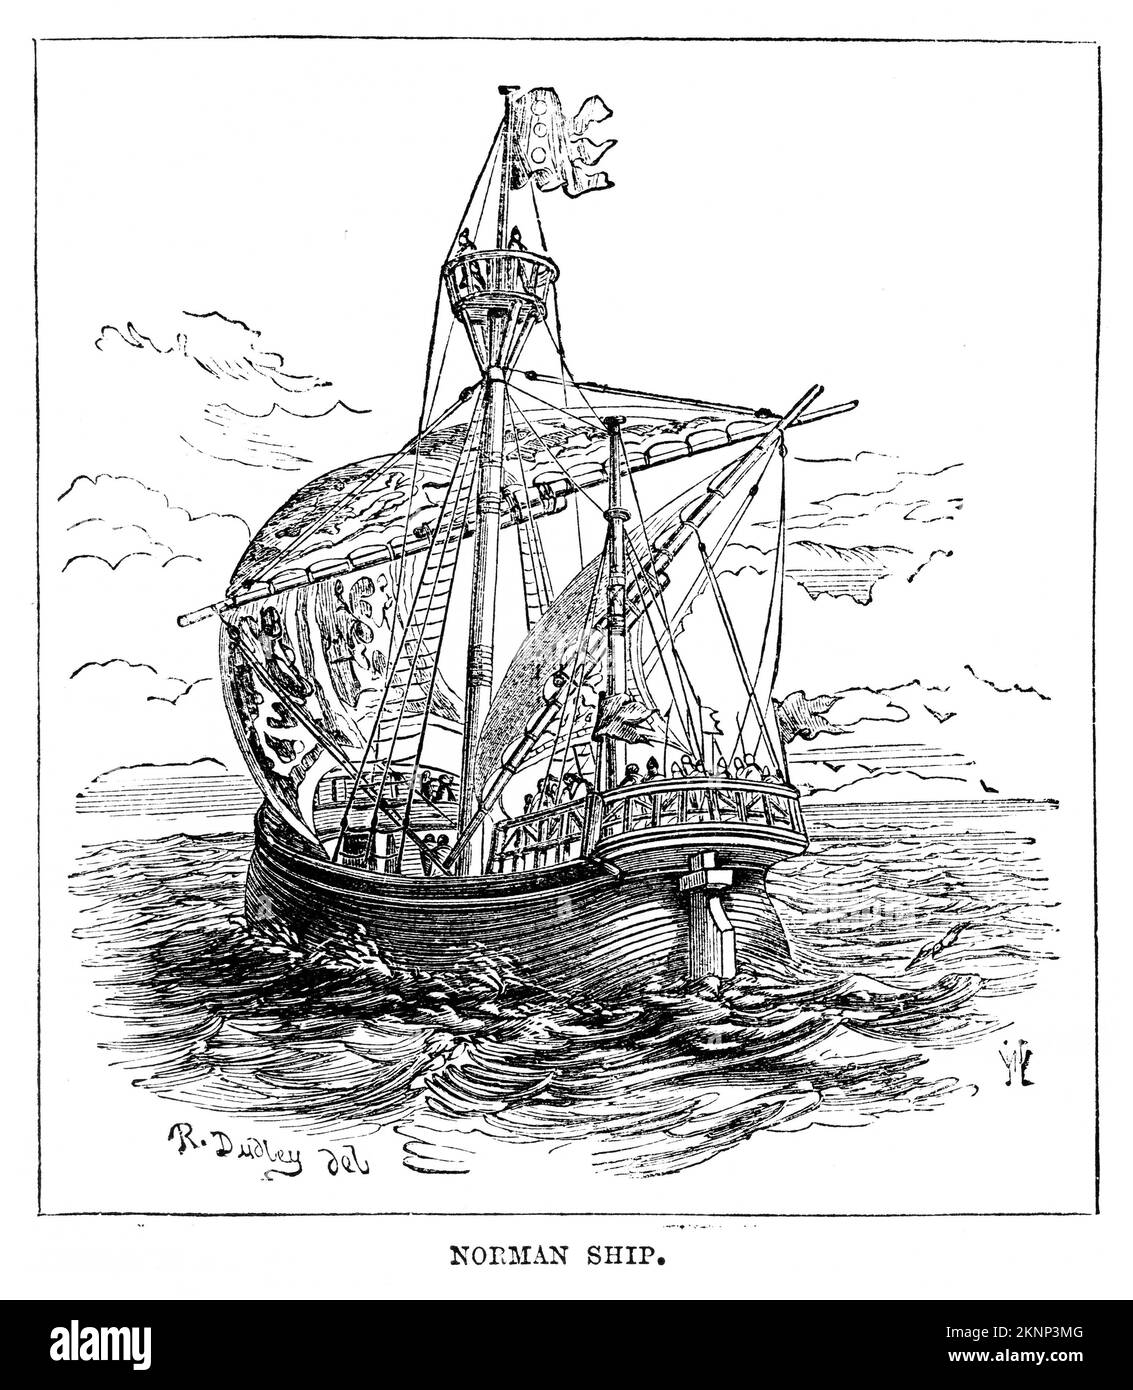 Gravure d'un navire normand en mer, vers 1880 Banque D'Images